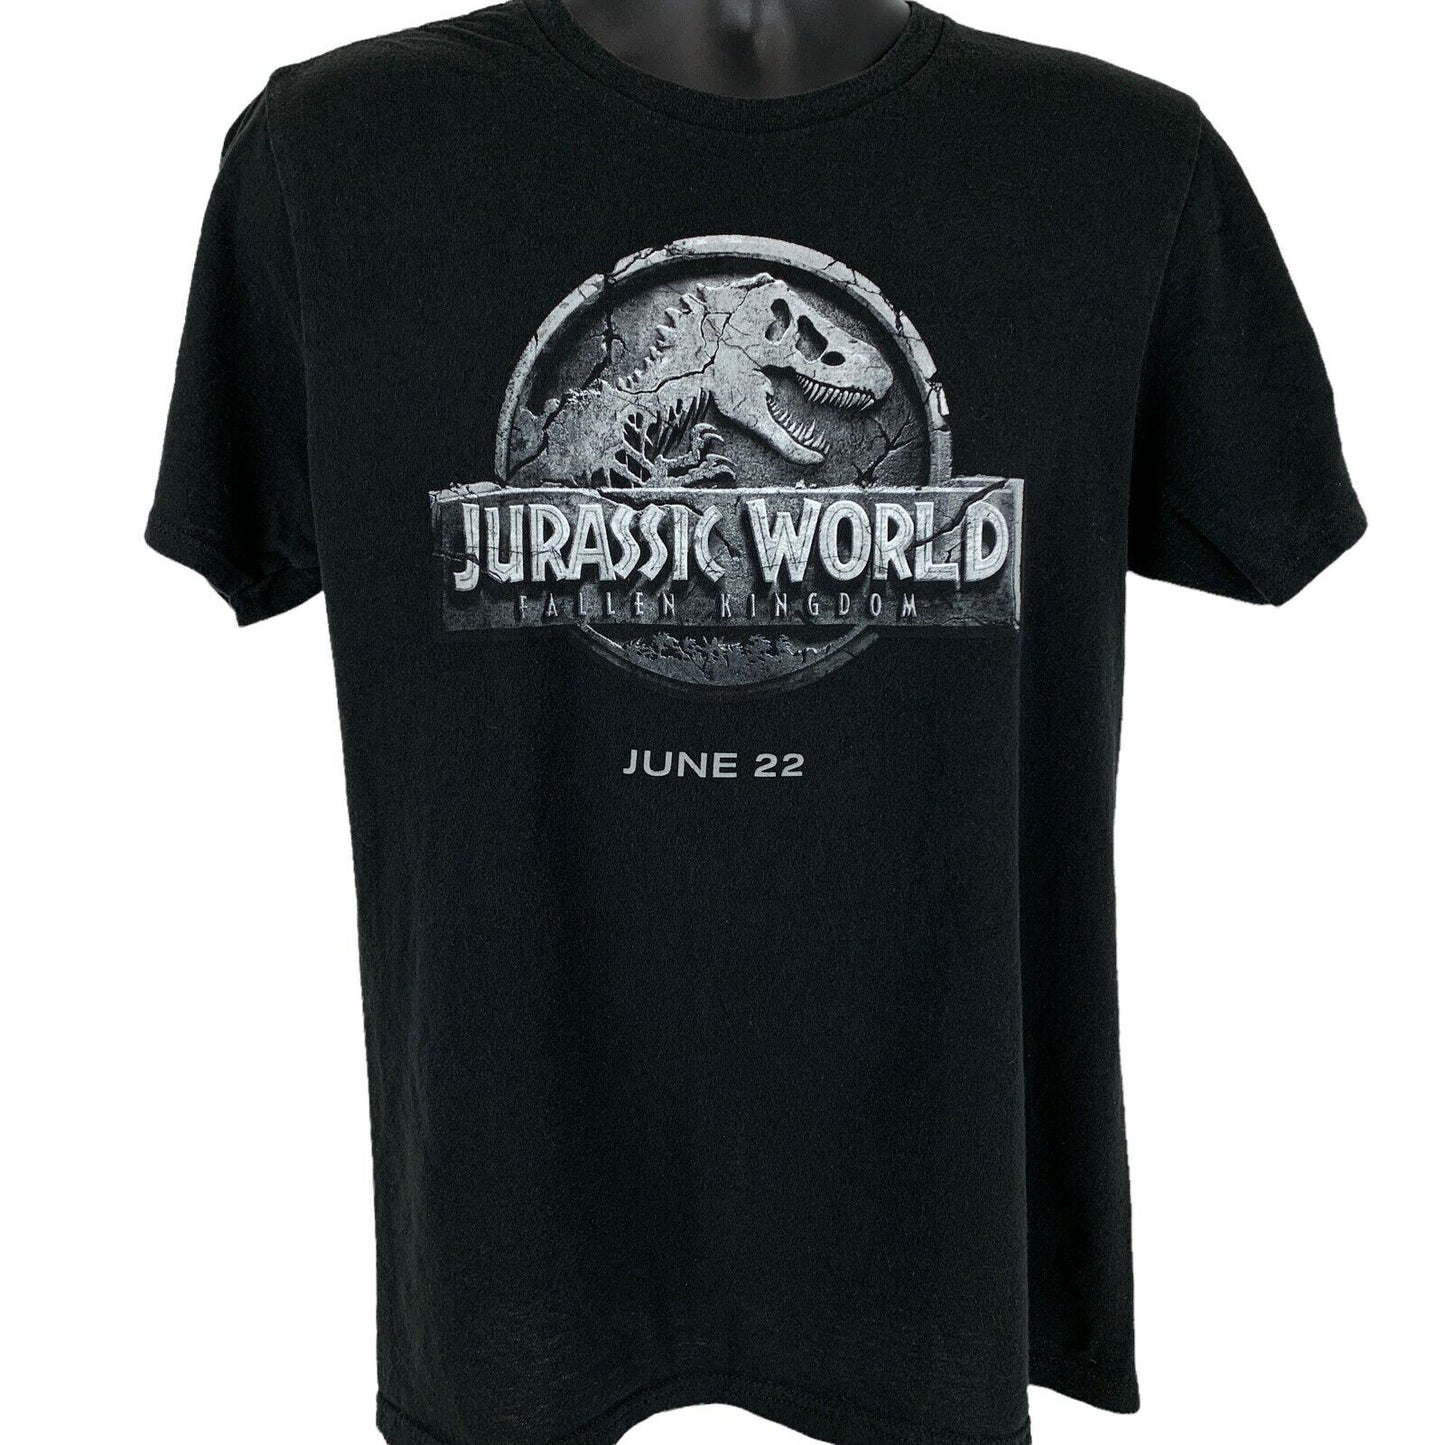 Jurassic World Fallen Kingdom T Shirt Movie Film Promotional Graphic Tee Medium